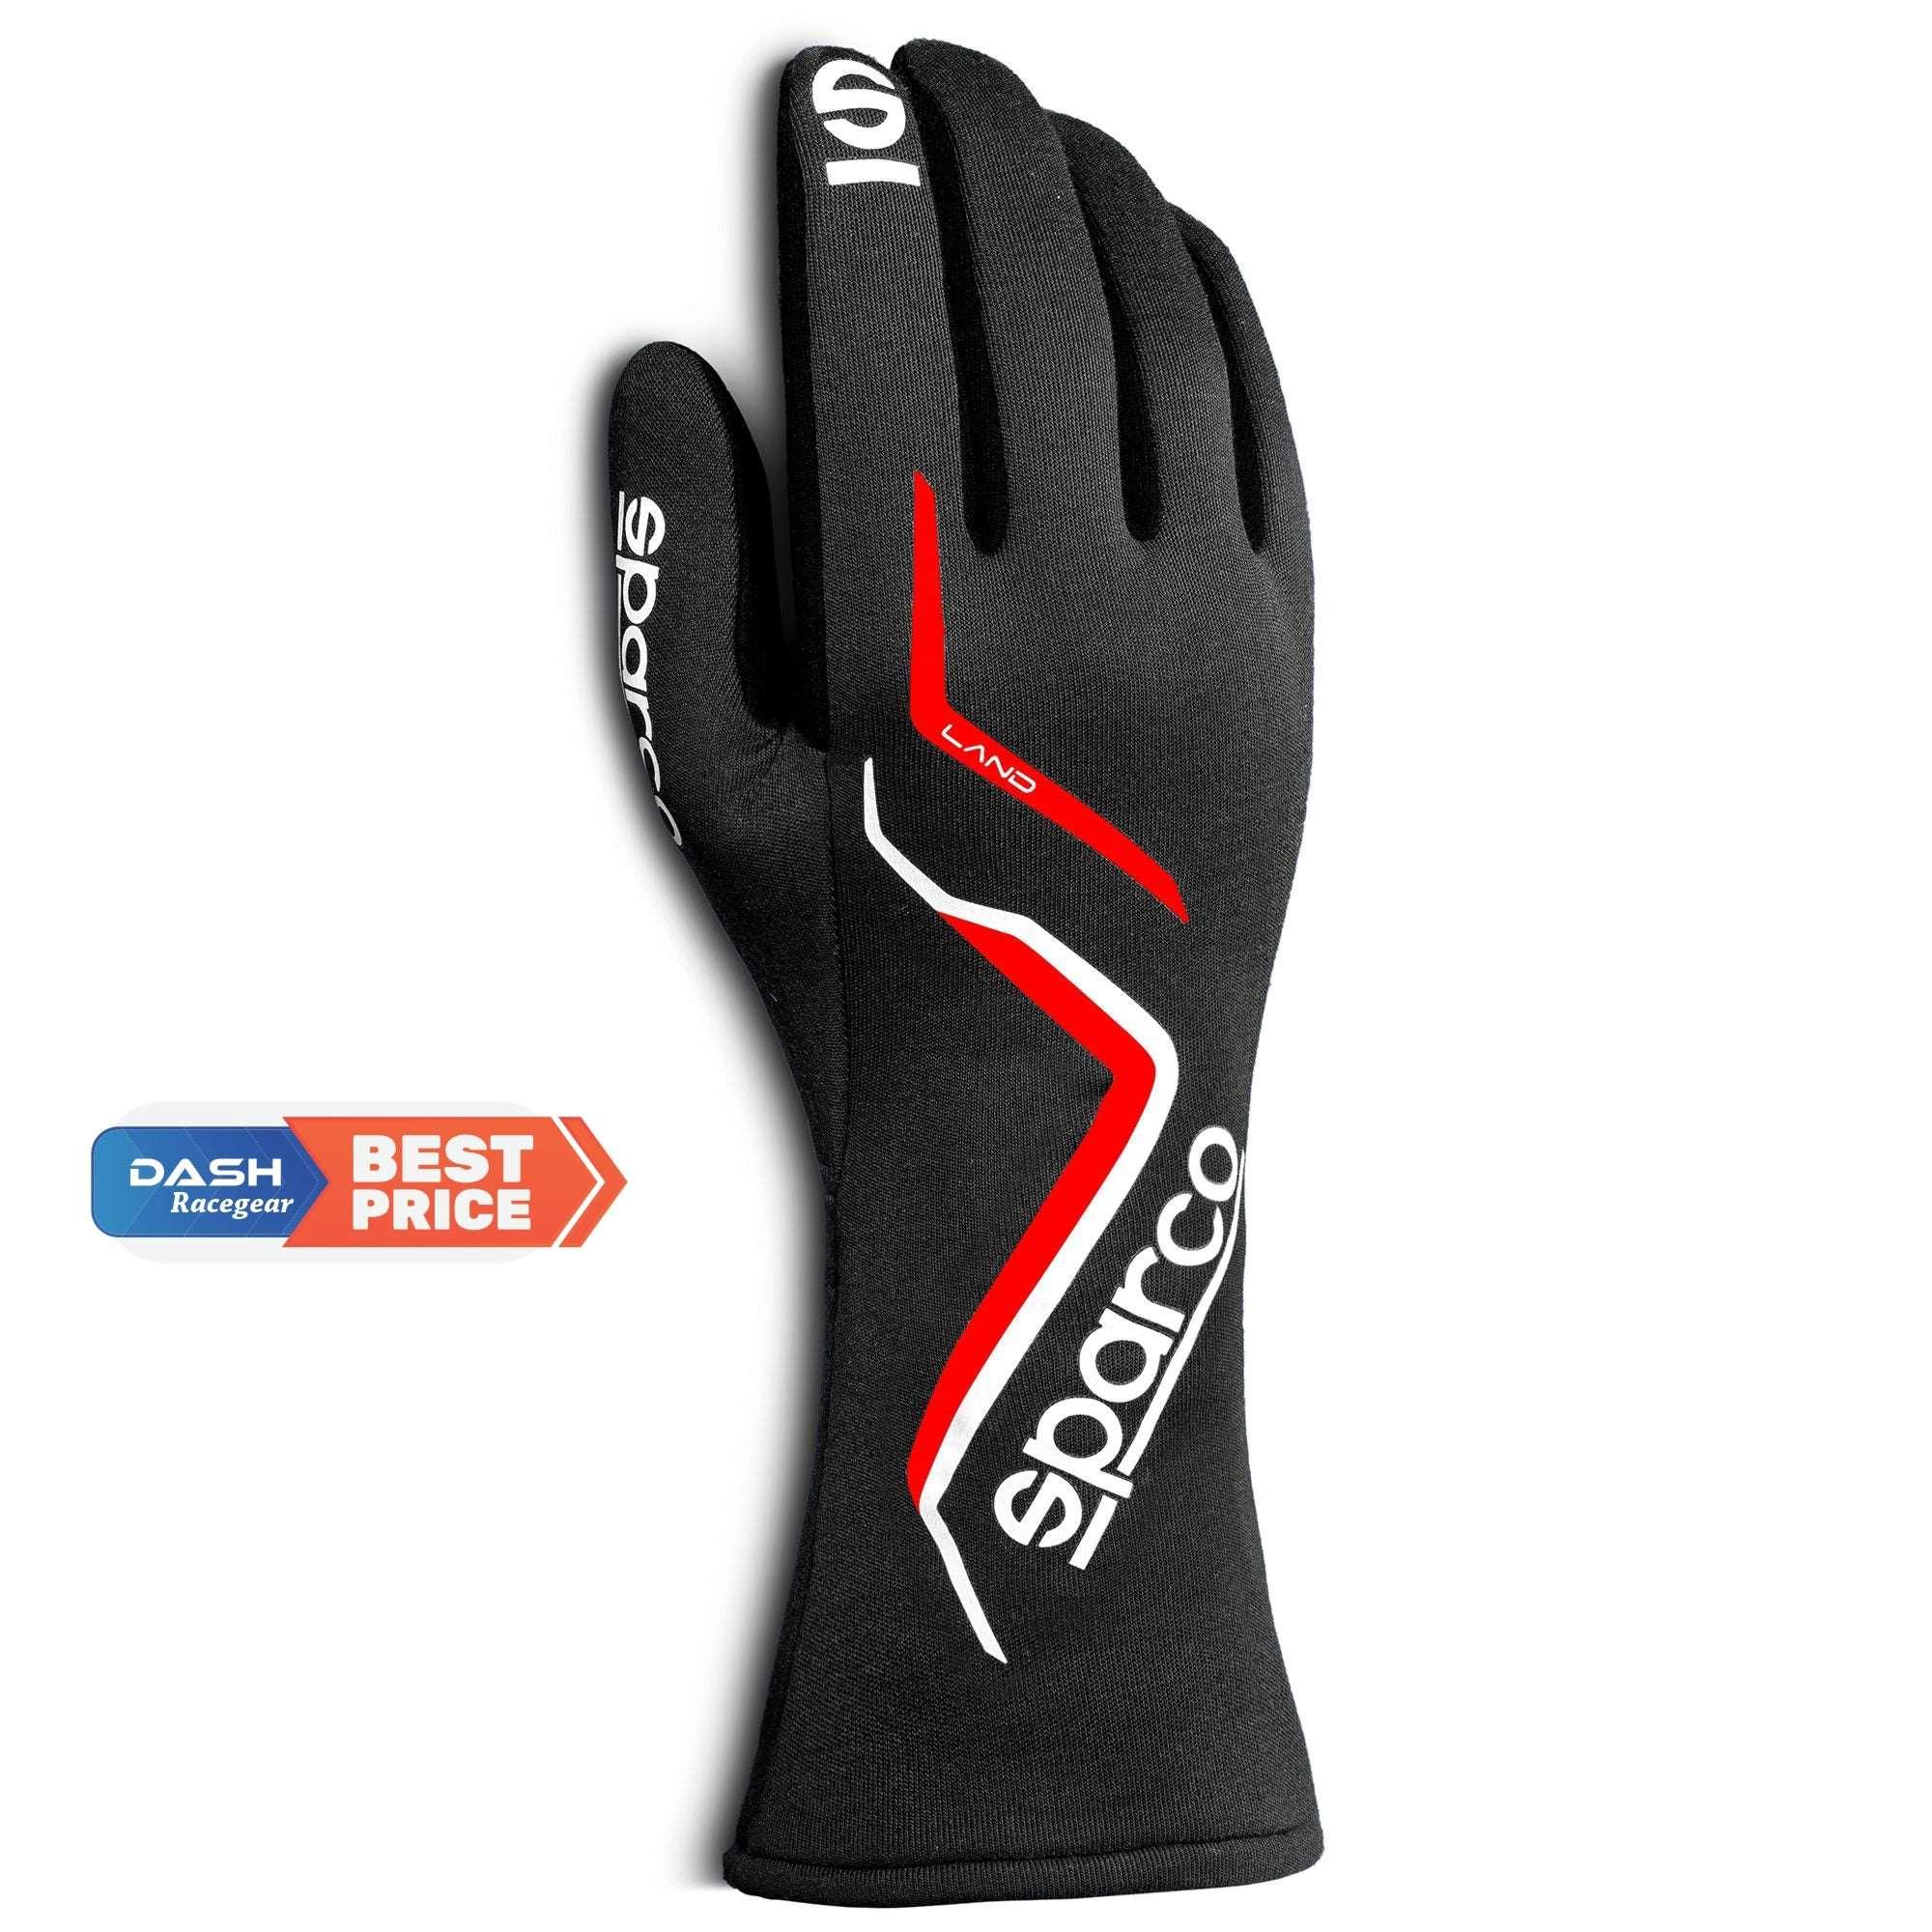 Dash Sparco Land Race Gloves DASH RACEGEAR